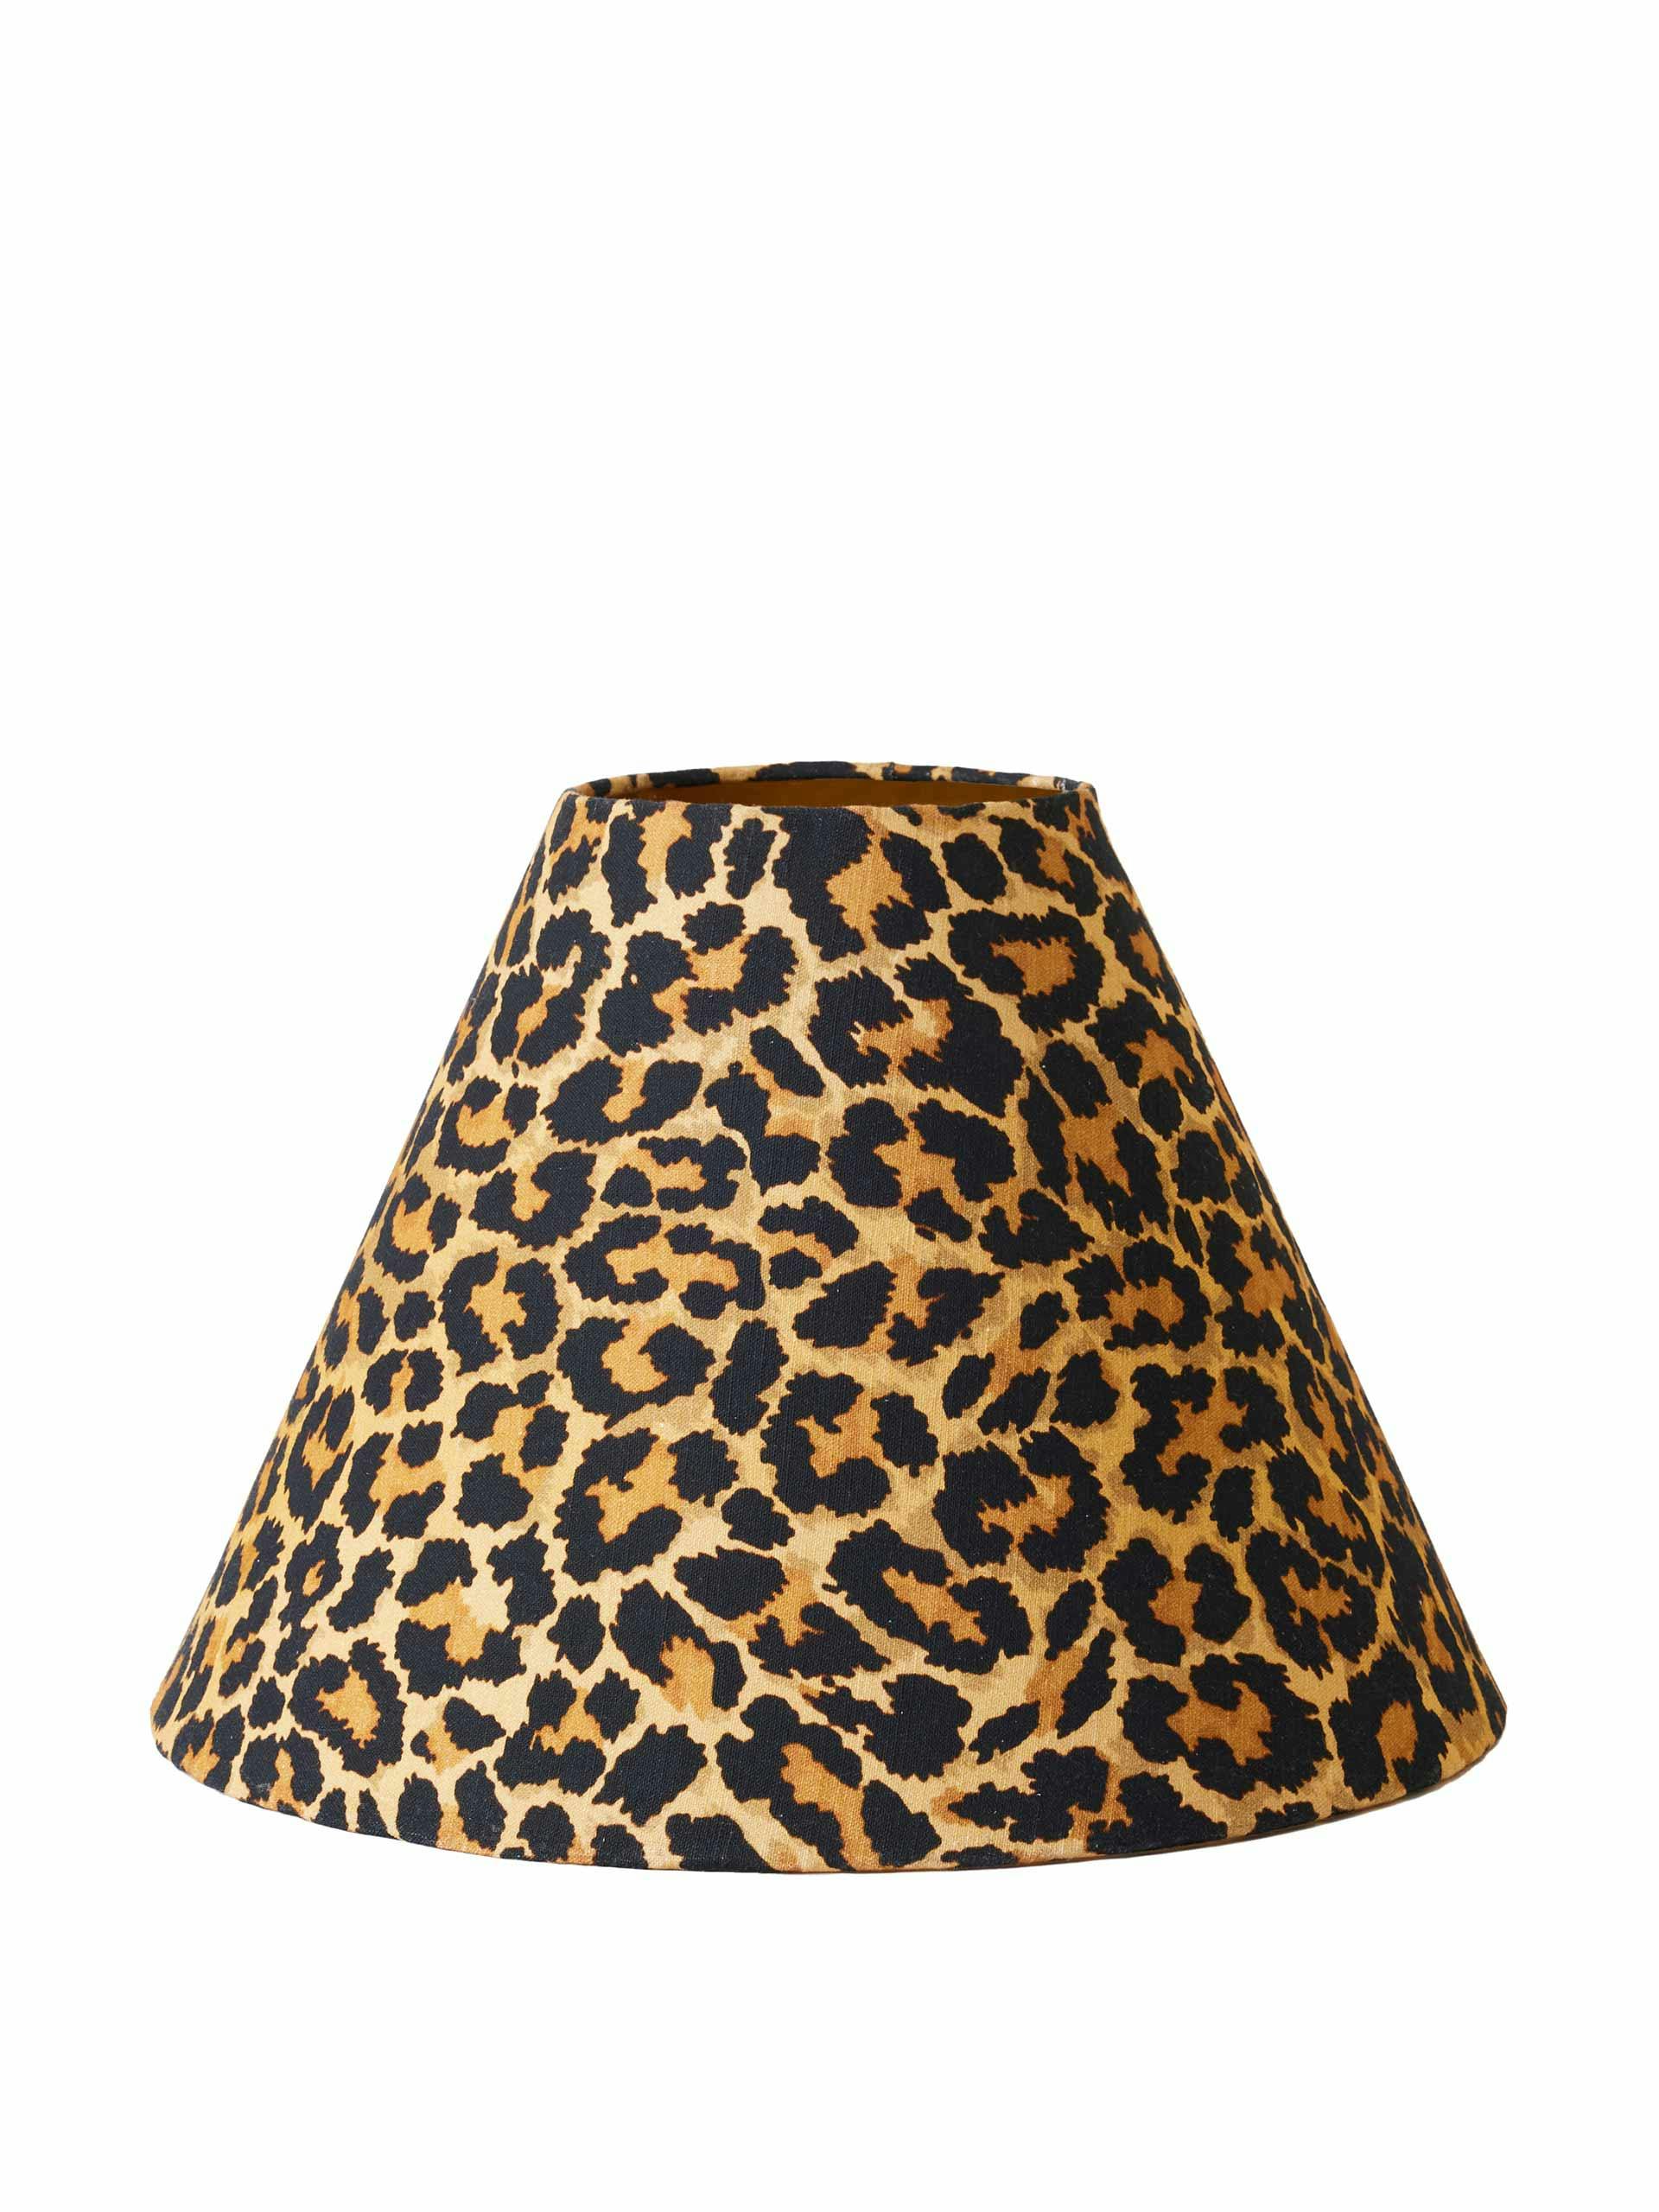 Leopard print lampshade